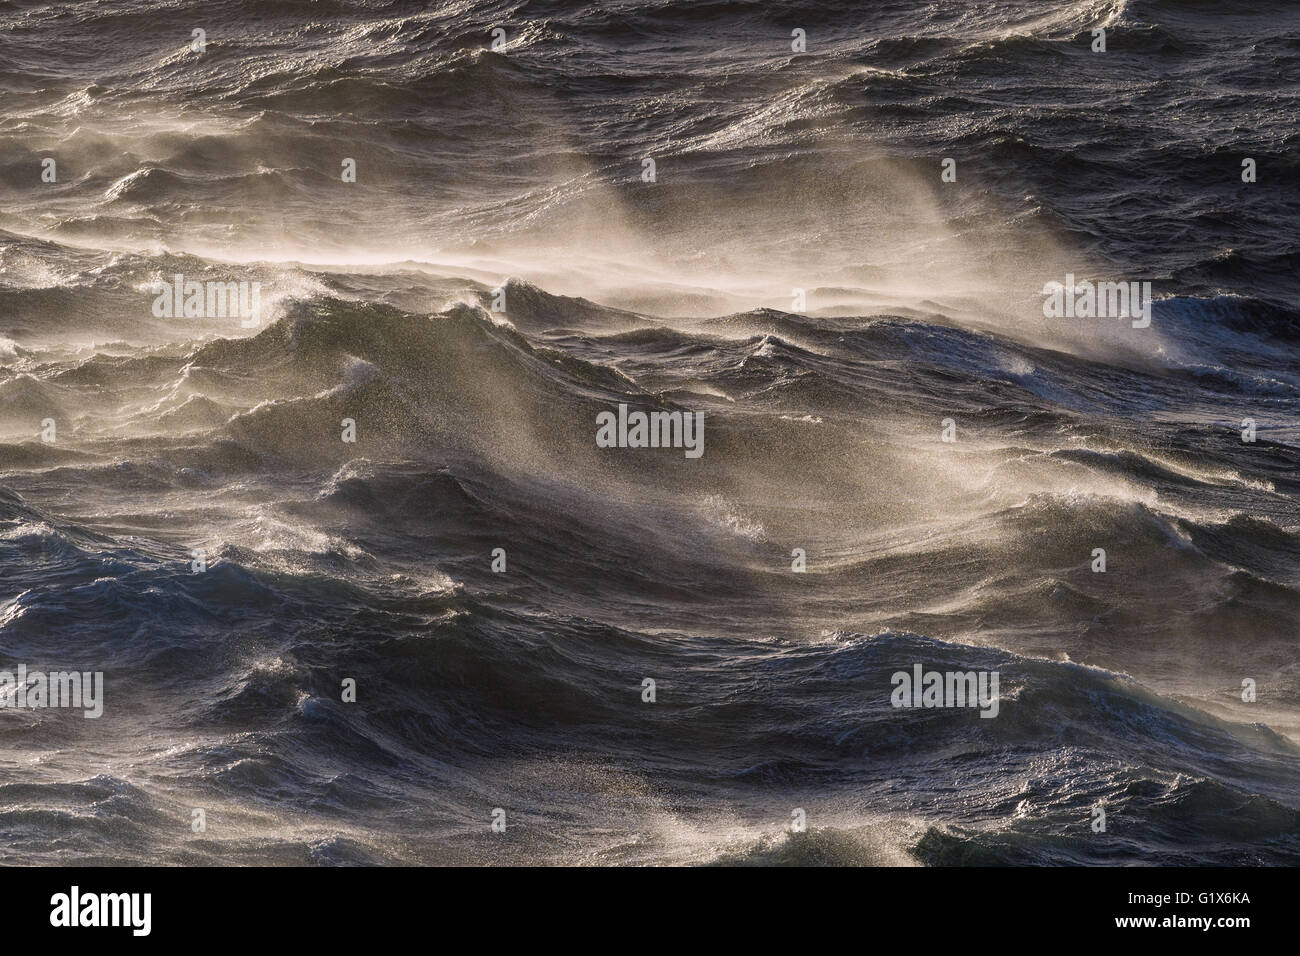 Moderately rough sea, waves with whitecaps, sea surface, North Atlantic, Atlantic Stock Photo